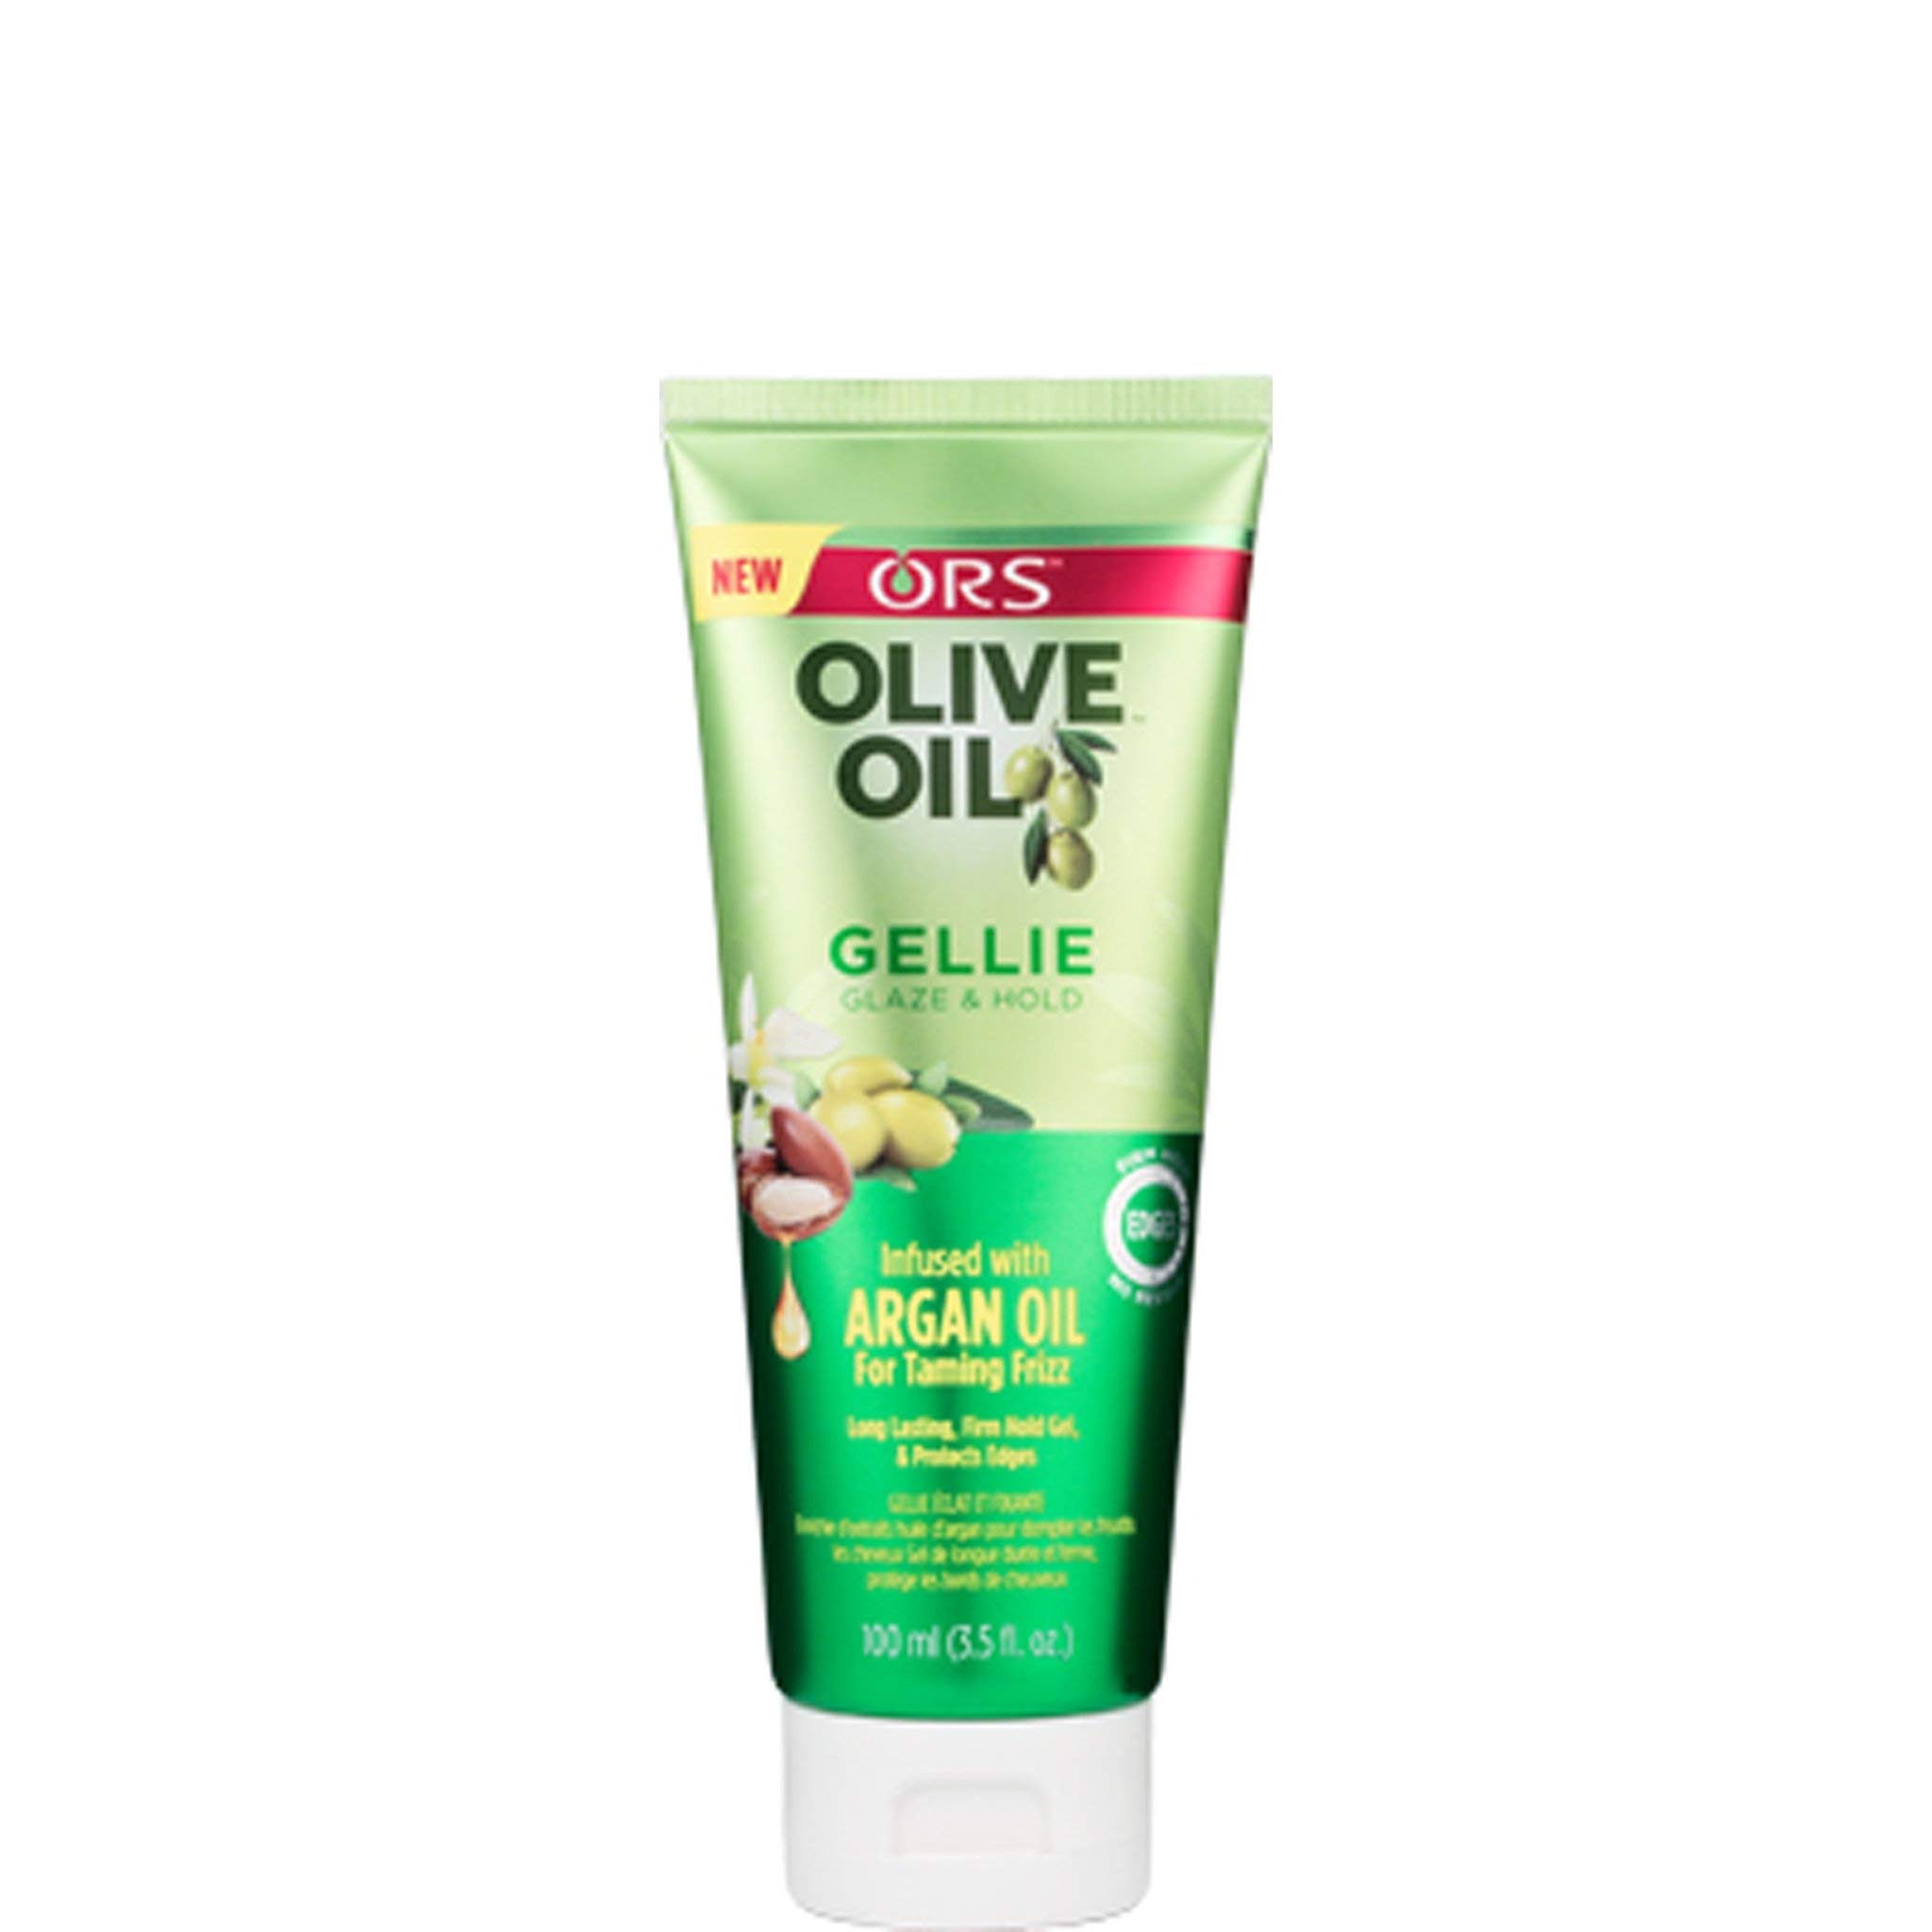 ORS Olive Oil Gellie Glaze & Hold 100ml